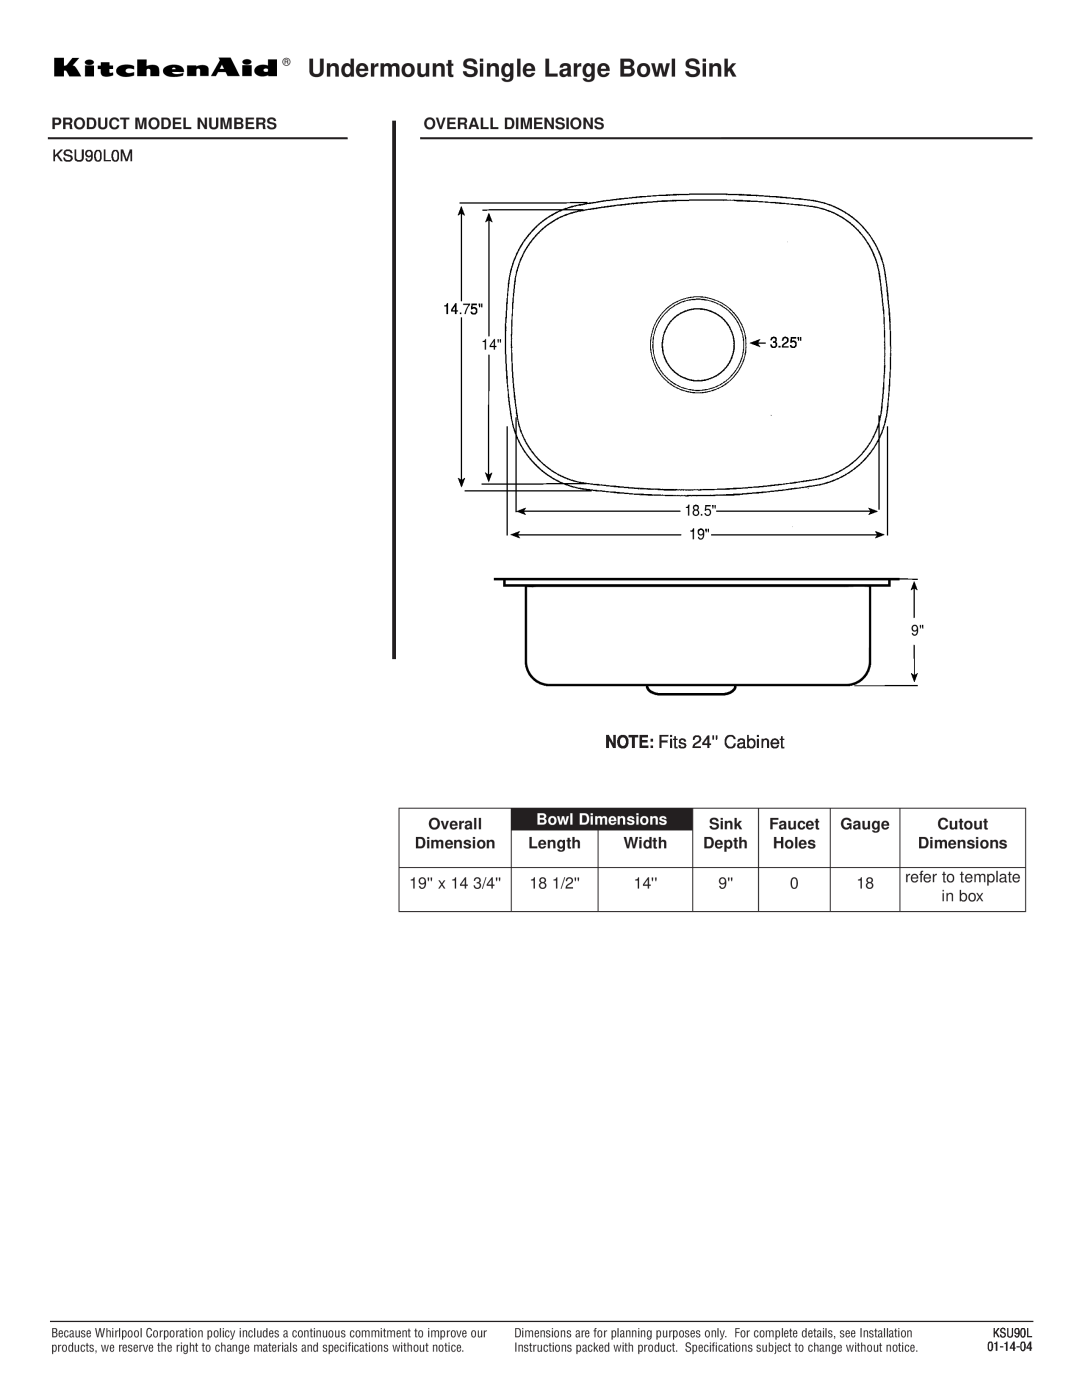 KitchenAid KSU90L dimensions Undermount Single Large Bowl Sink, NOTE Fits 24 Cabinet, Bowl Dimensions 